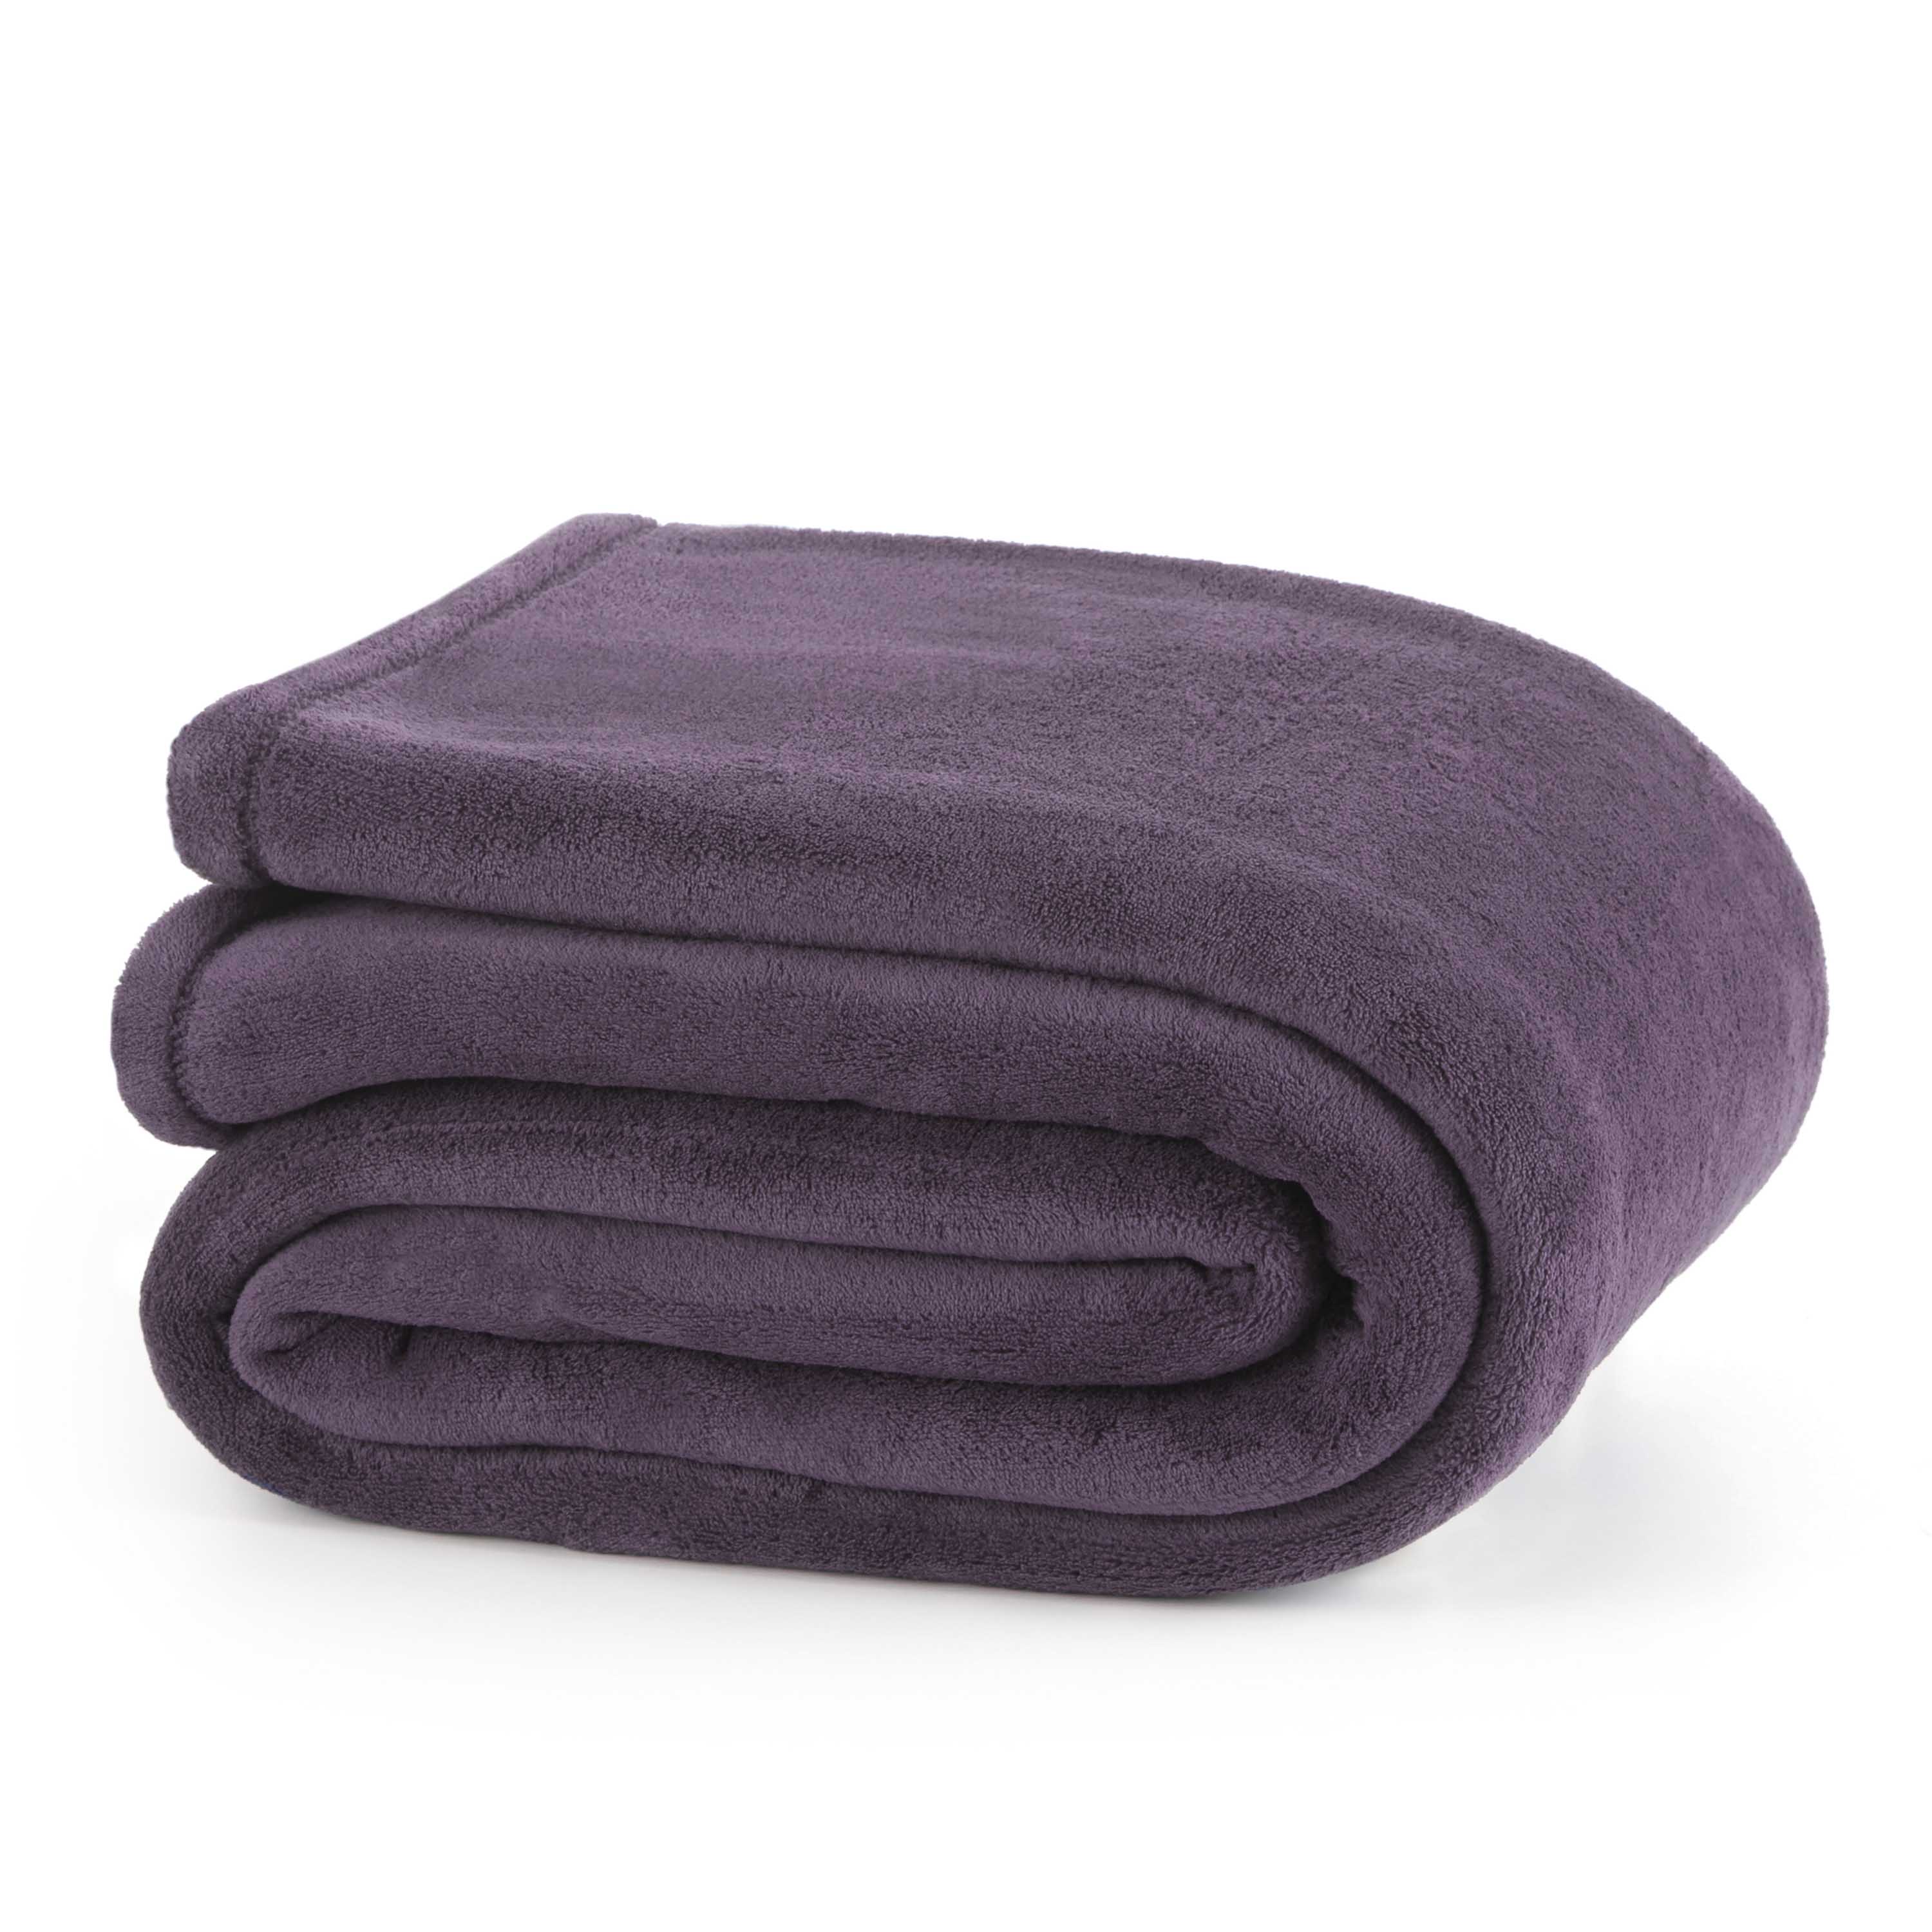  Berkshire Blanket Microfleece Twin Size Bed Blanket